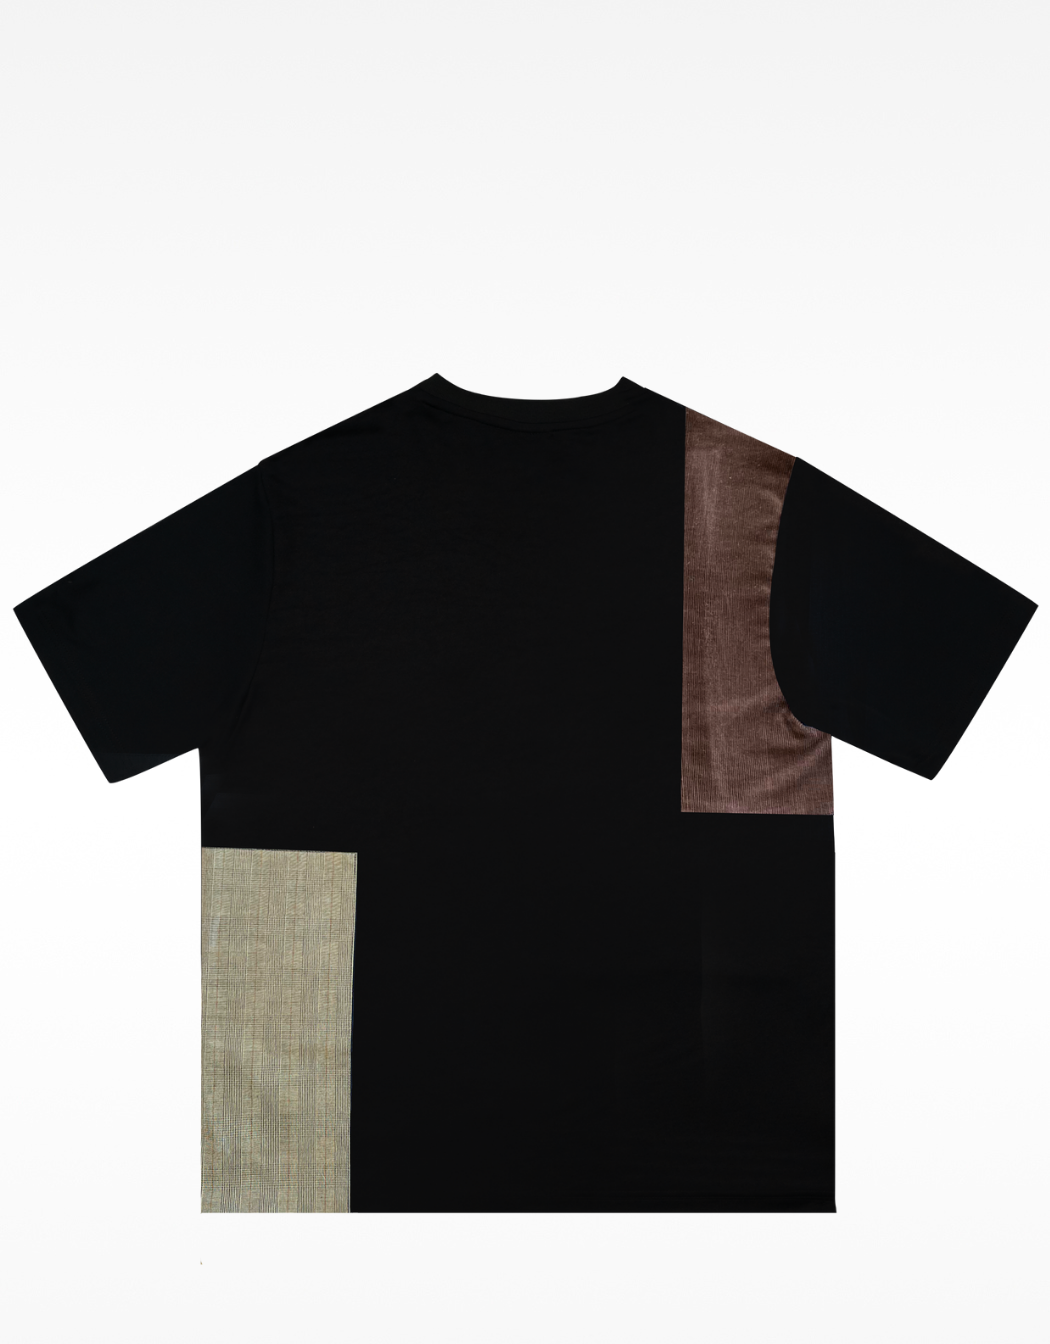 tee-shirt-boogie-mondrian-upcycling-madeinfrance-dijon-artisanat-creation-2C-dos